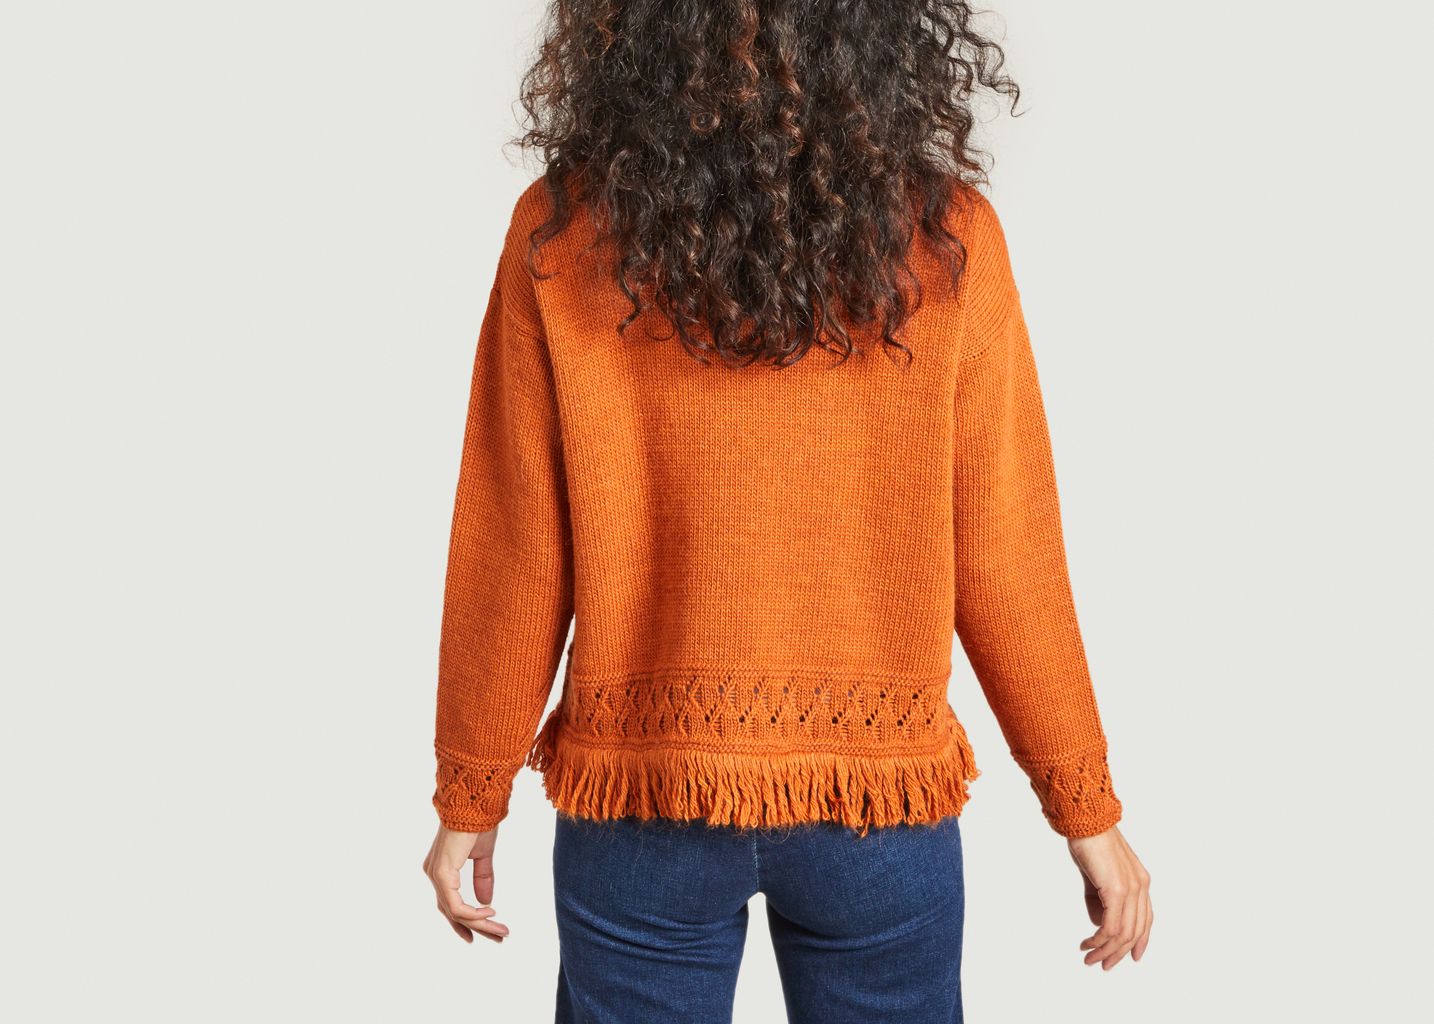 Lilas fringed sweater - Antoine et Lili